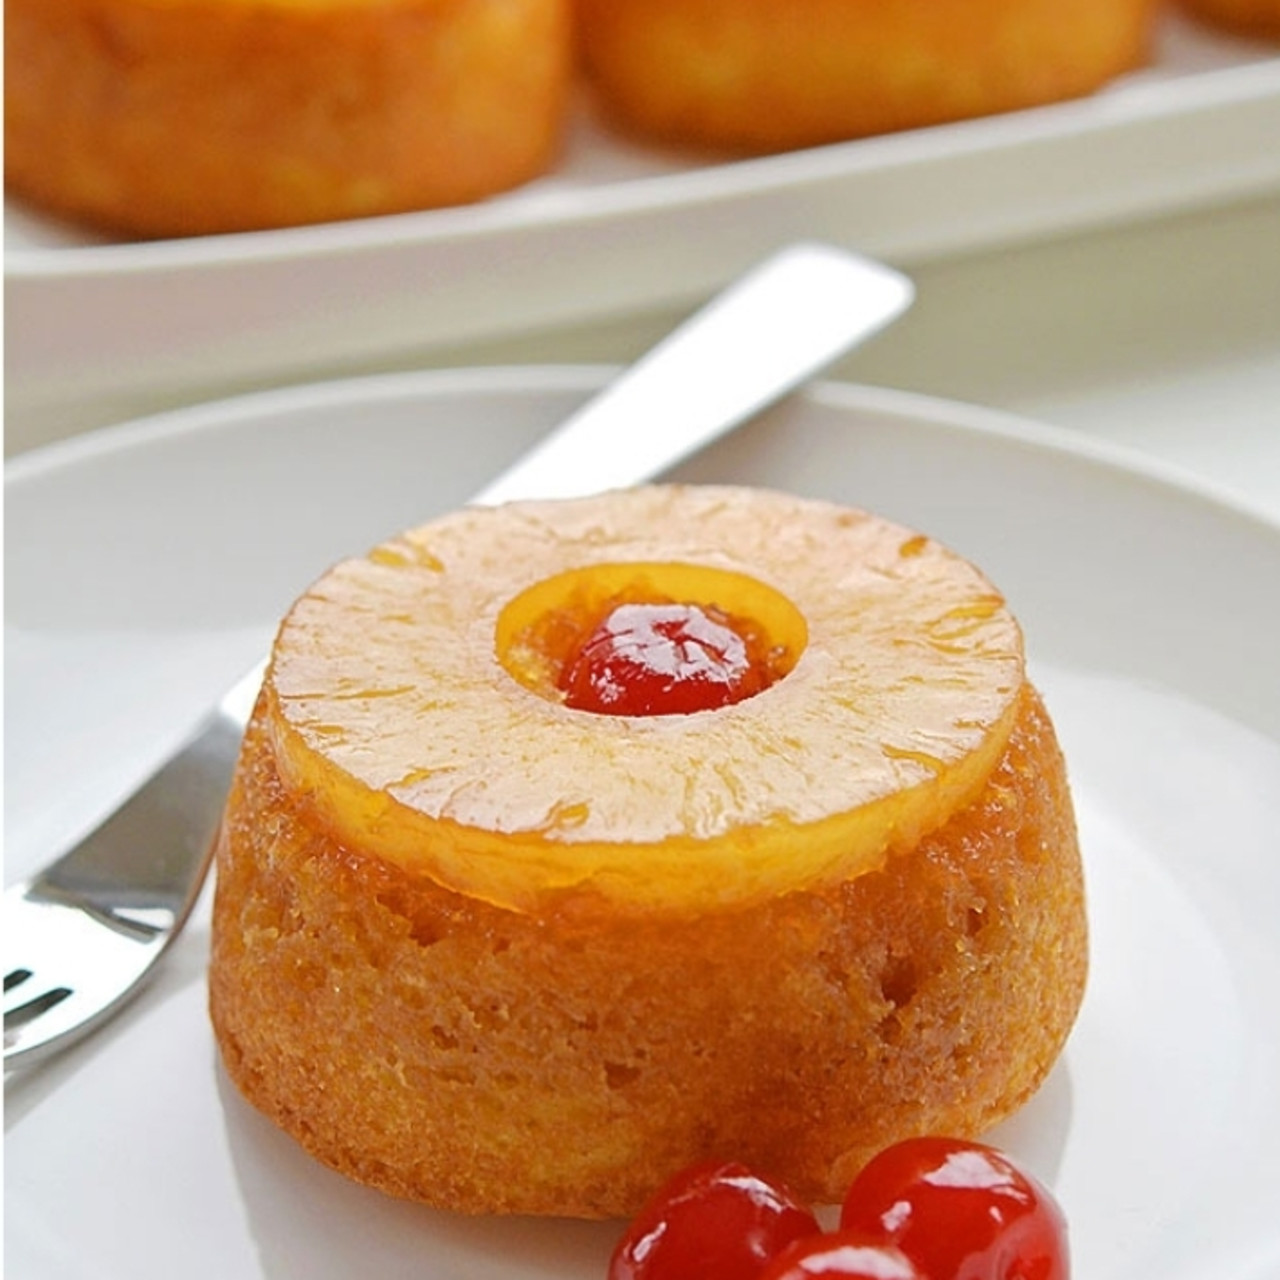 Pineapple upside-down cake recipe | BBC Good Food